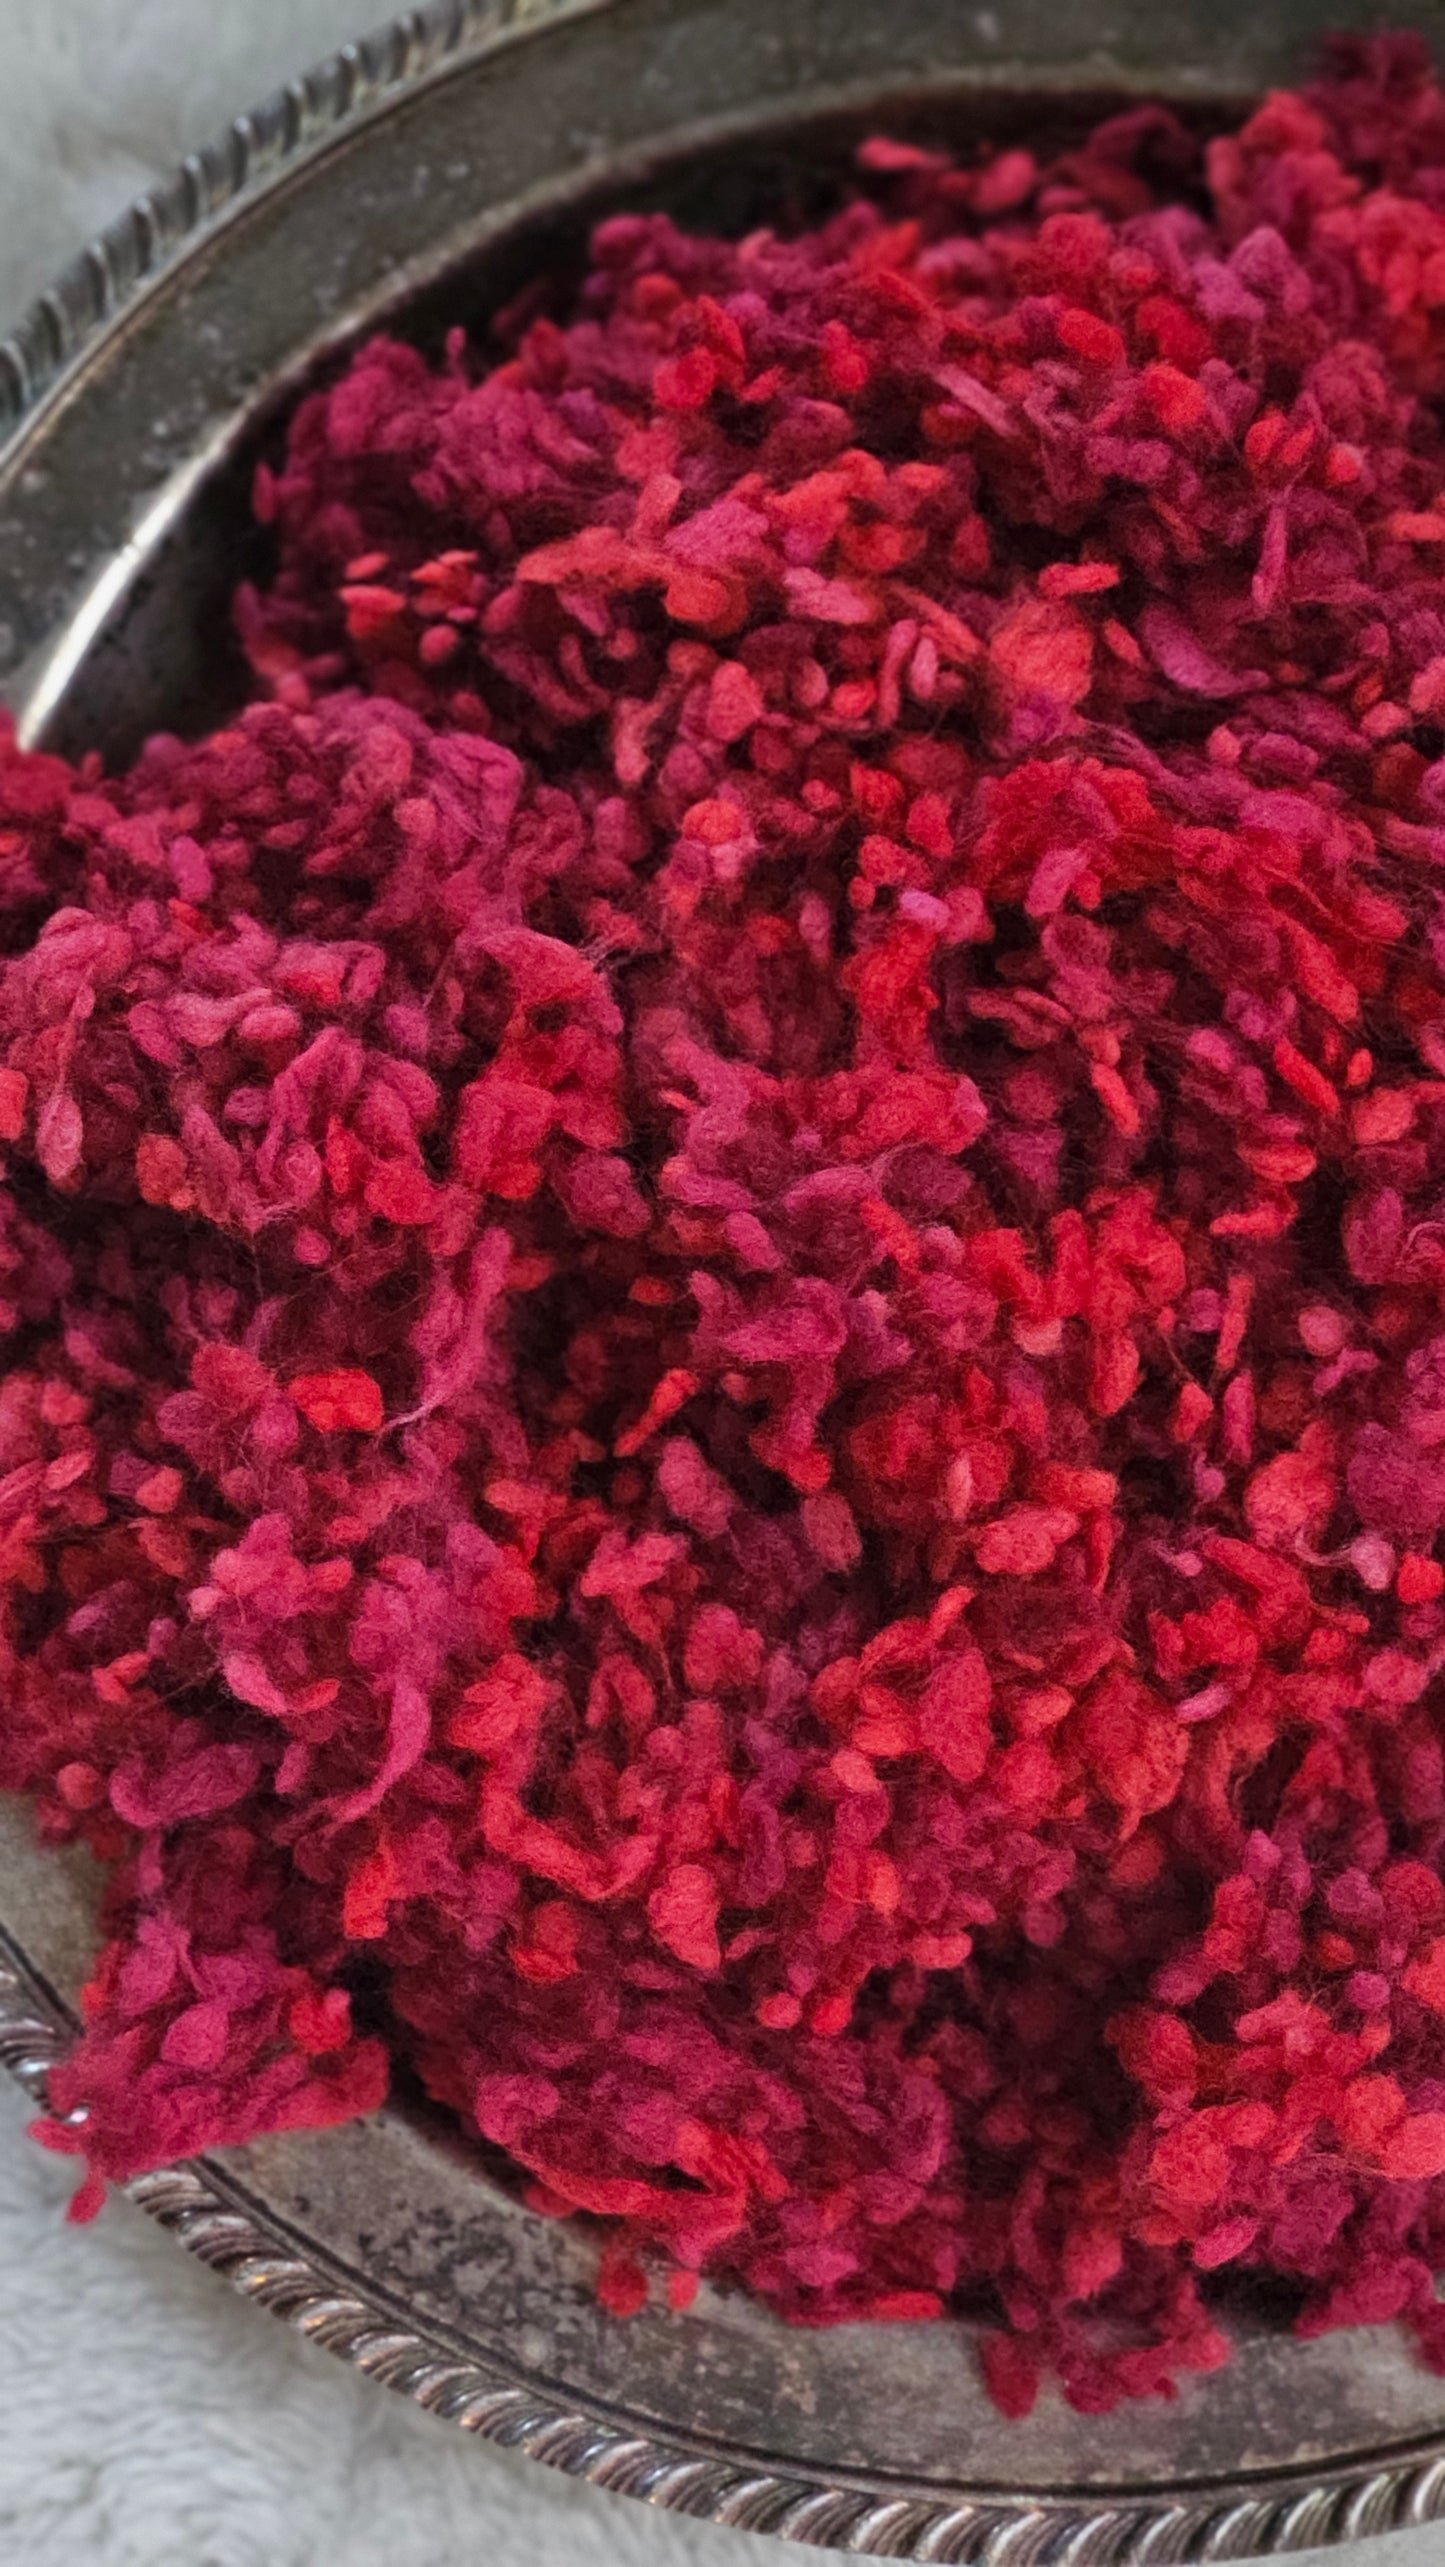 CHRYSANTHEMUM - Dyed Cotton Nepps - 1 oz